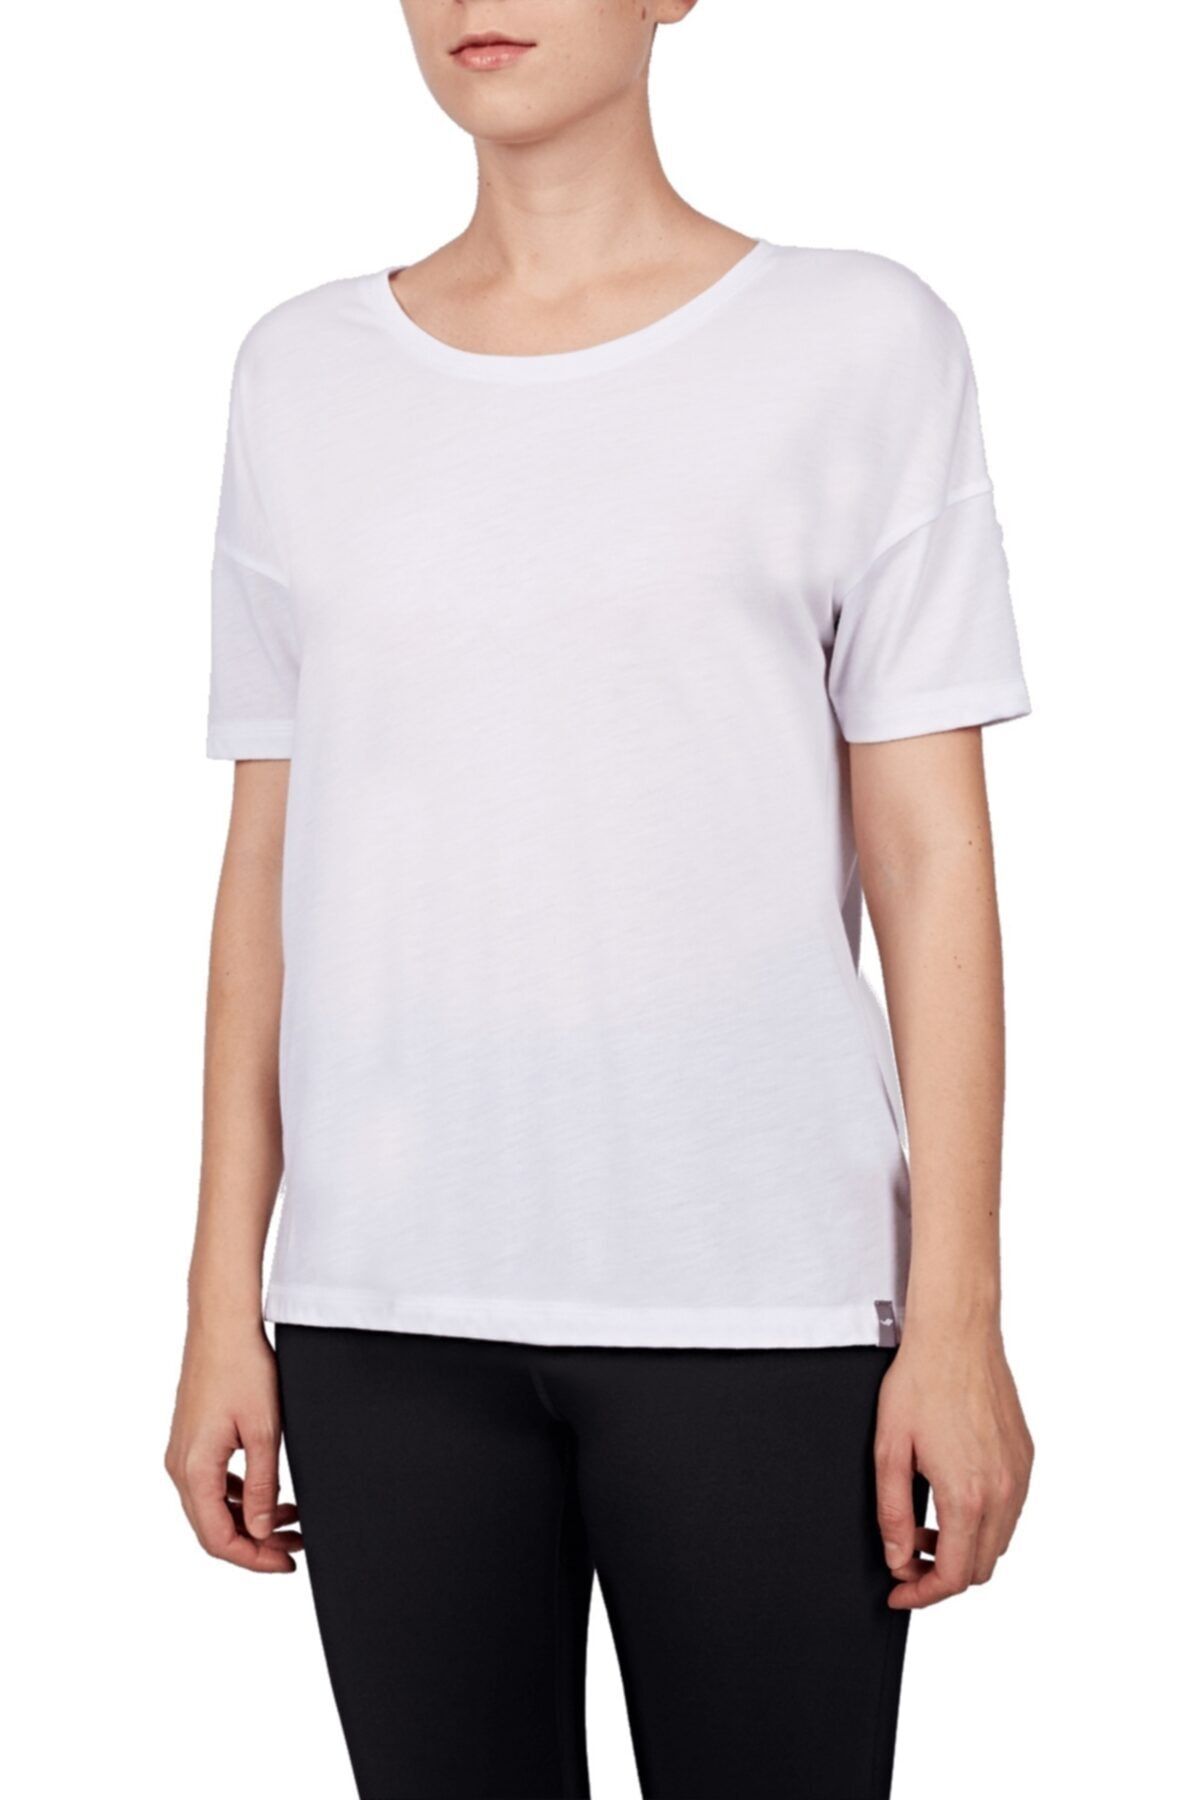 Lescon Kadın Beyaz T-shirt 18y-2161